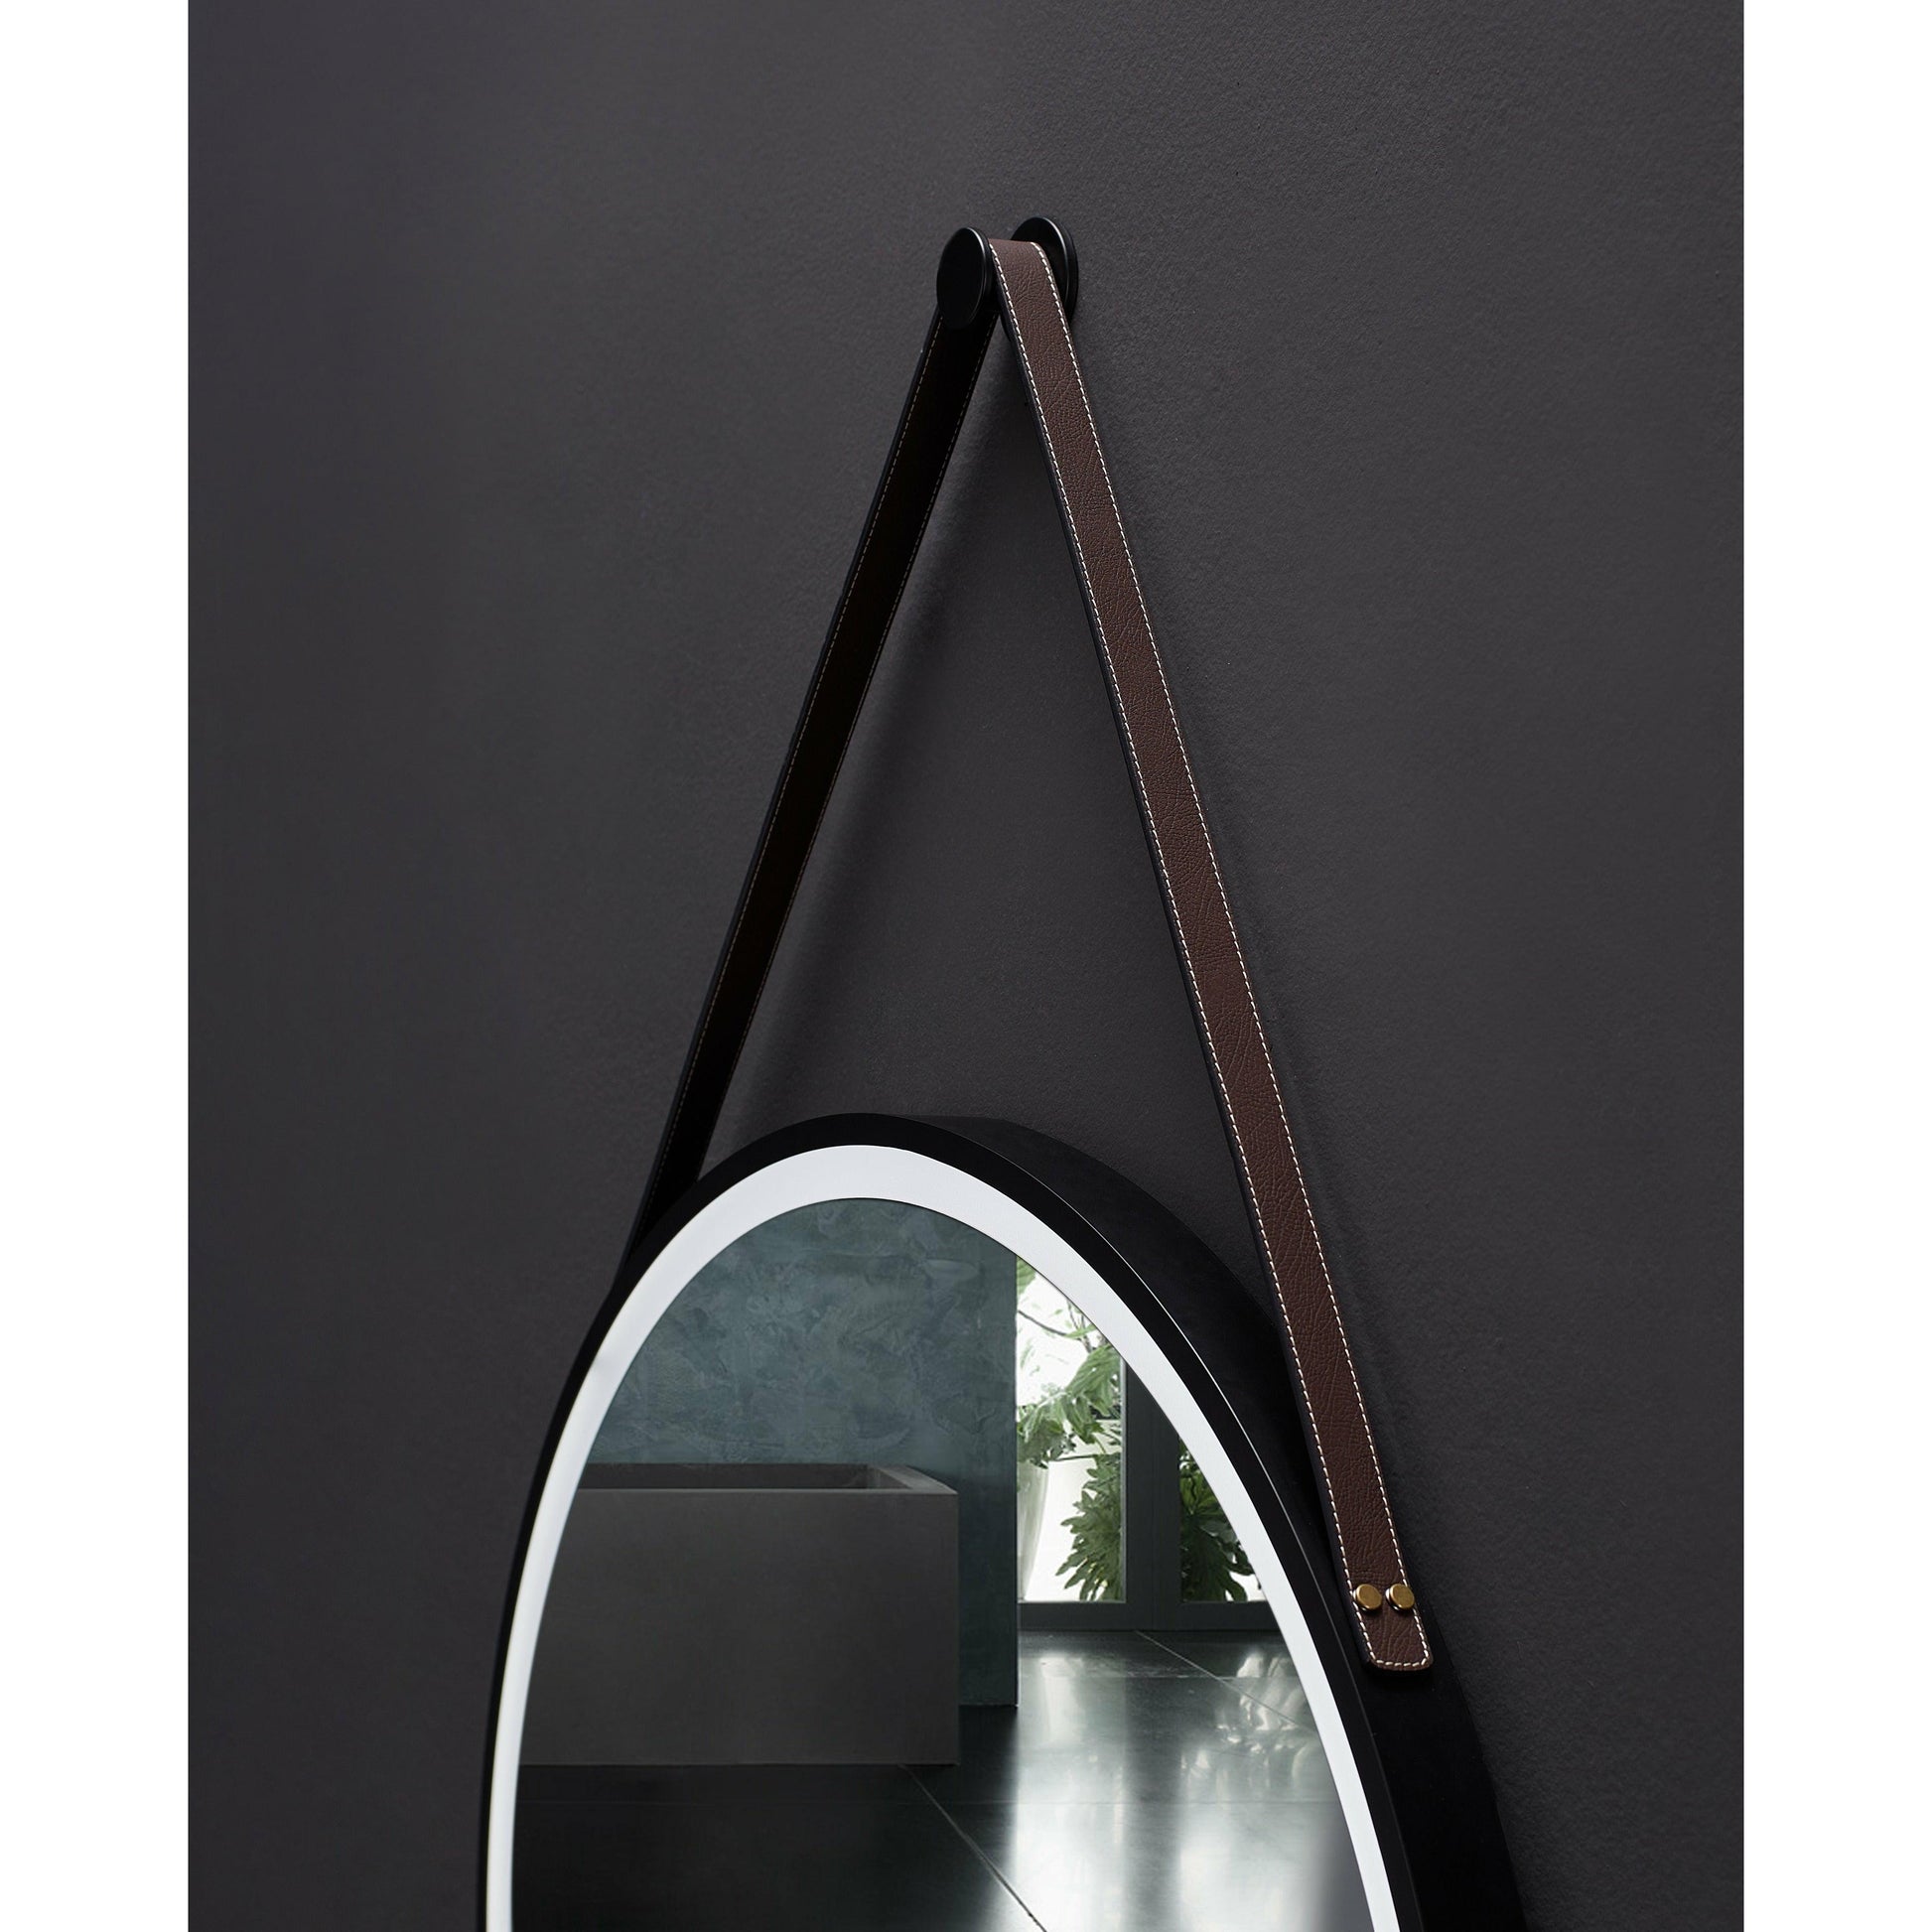 
  
  Ancerre Sangle Round LED Black Framed Mirror with Defogger and Vegan Leather Strap
  
